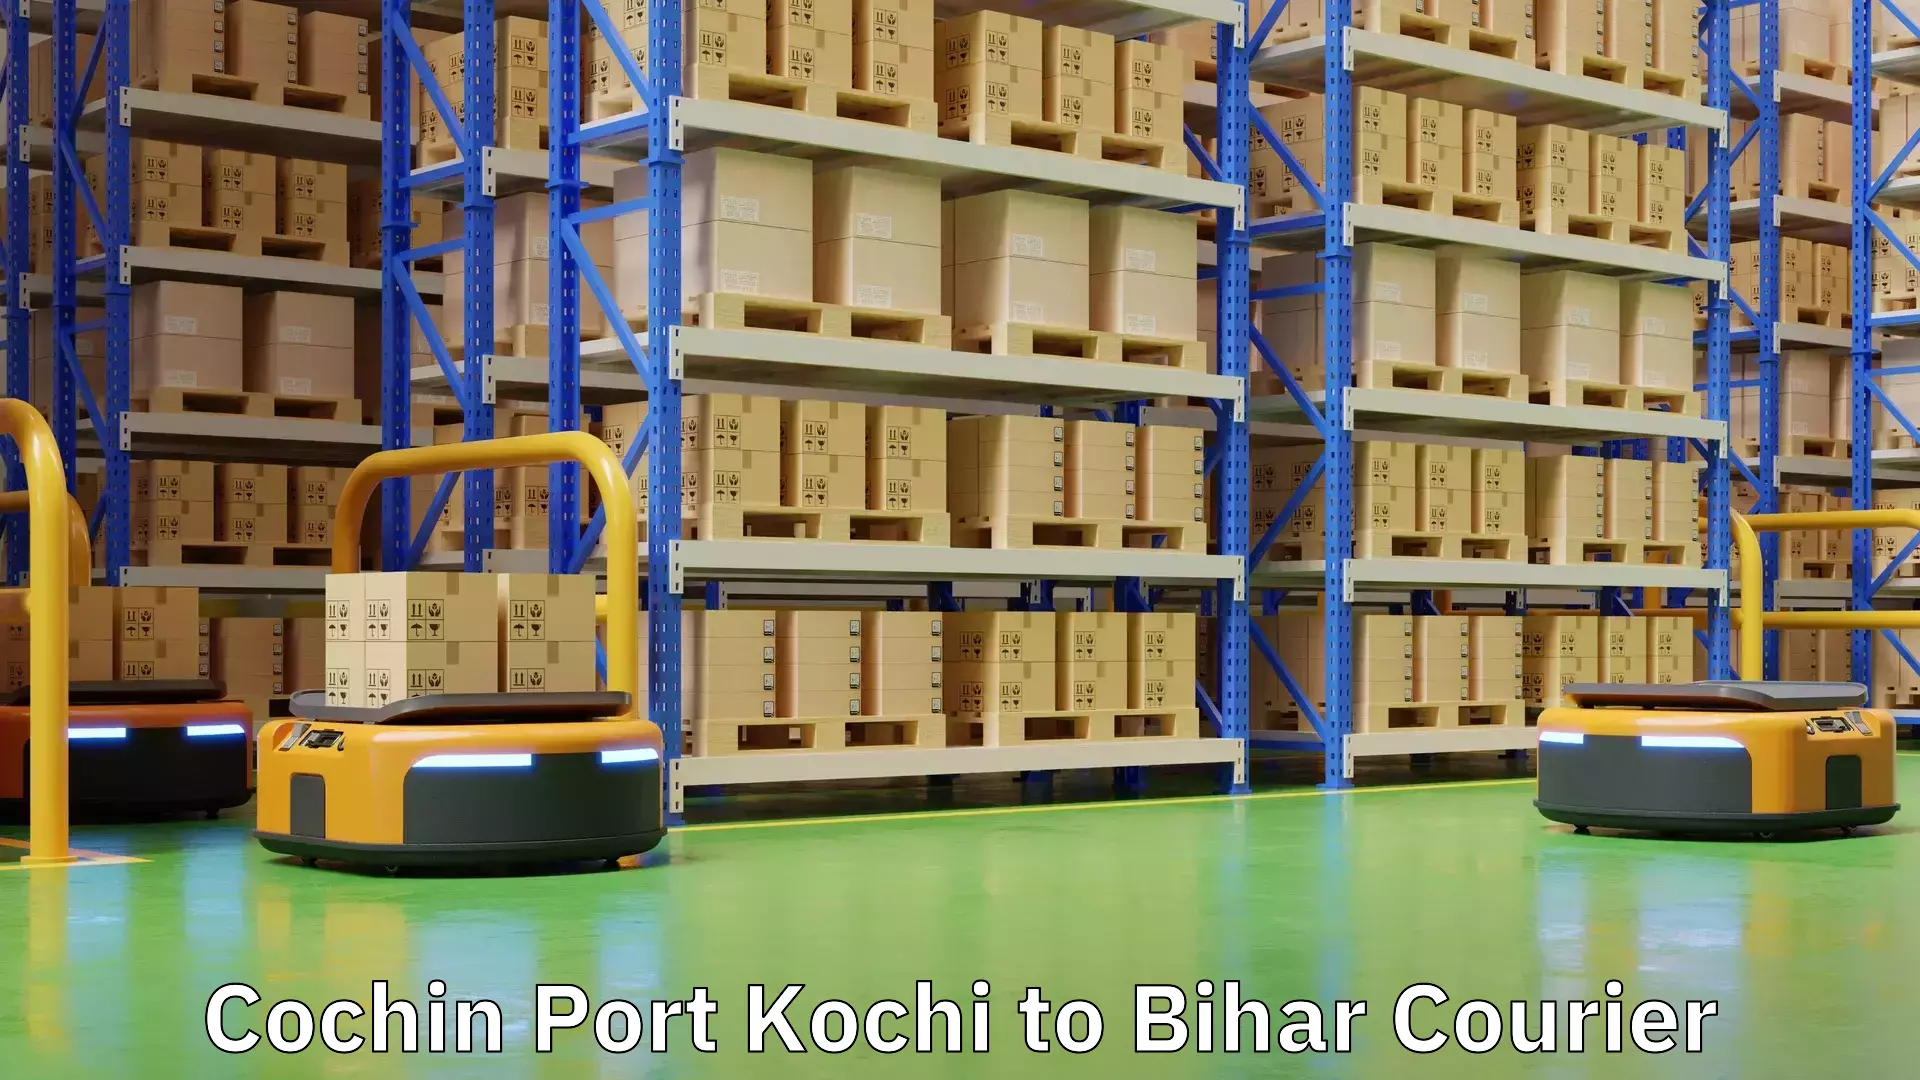 On-call courier service Cochin Port Kochi to Bihar